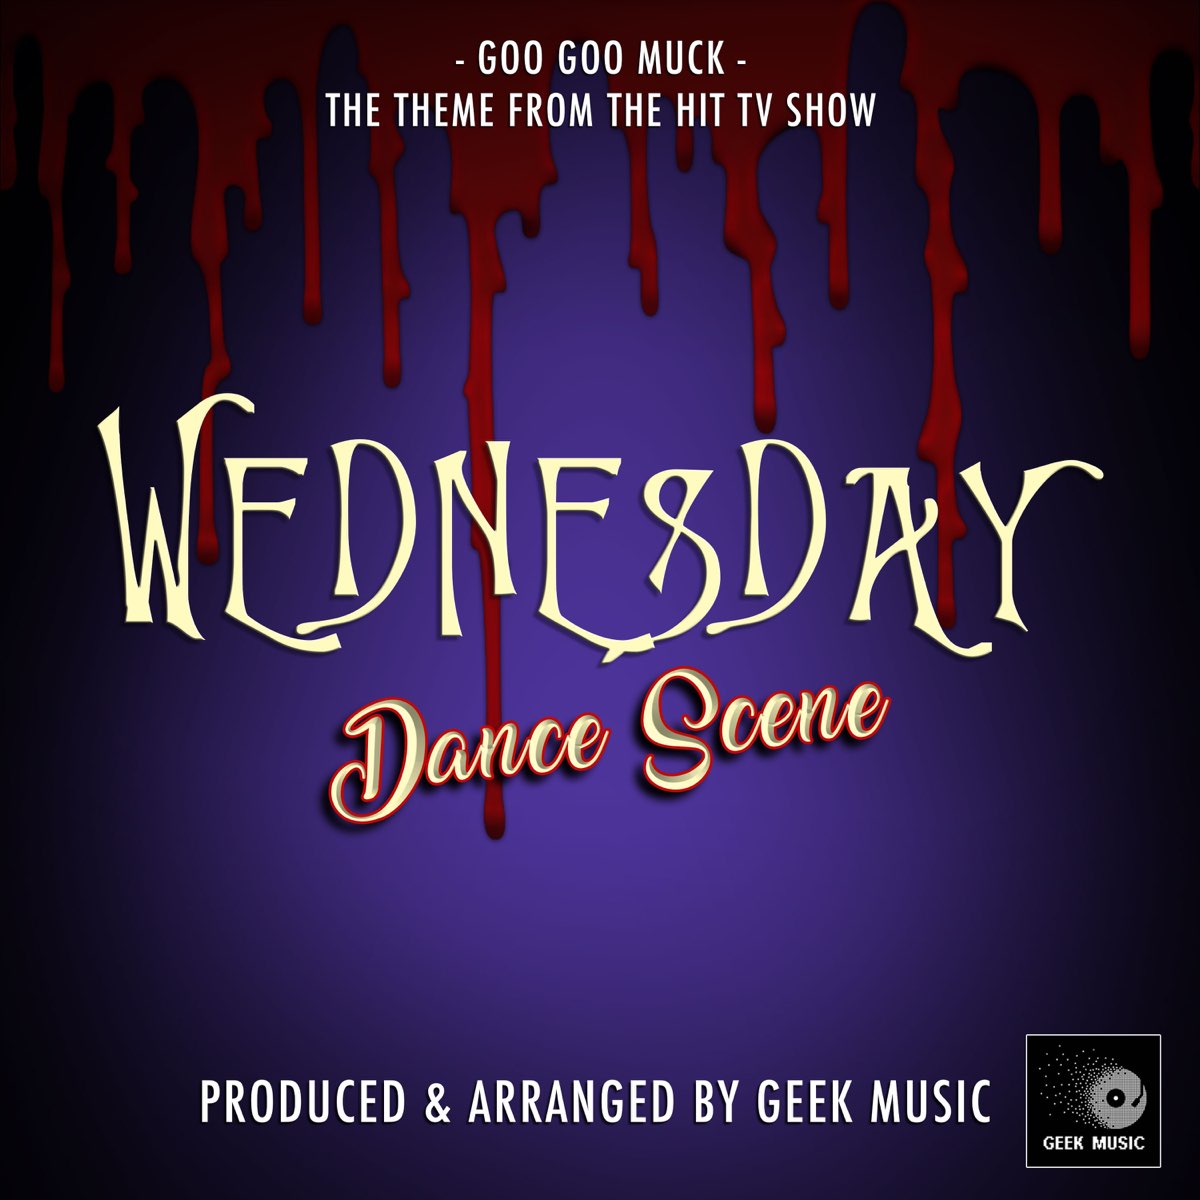 Goo Goo Muck From Wednesday Dance Scene Single By Geek Music On Apple Music